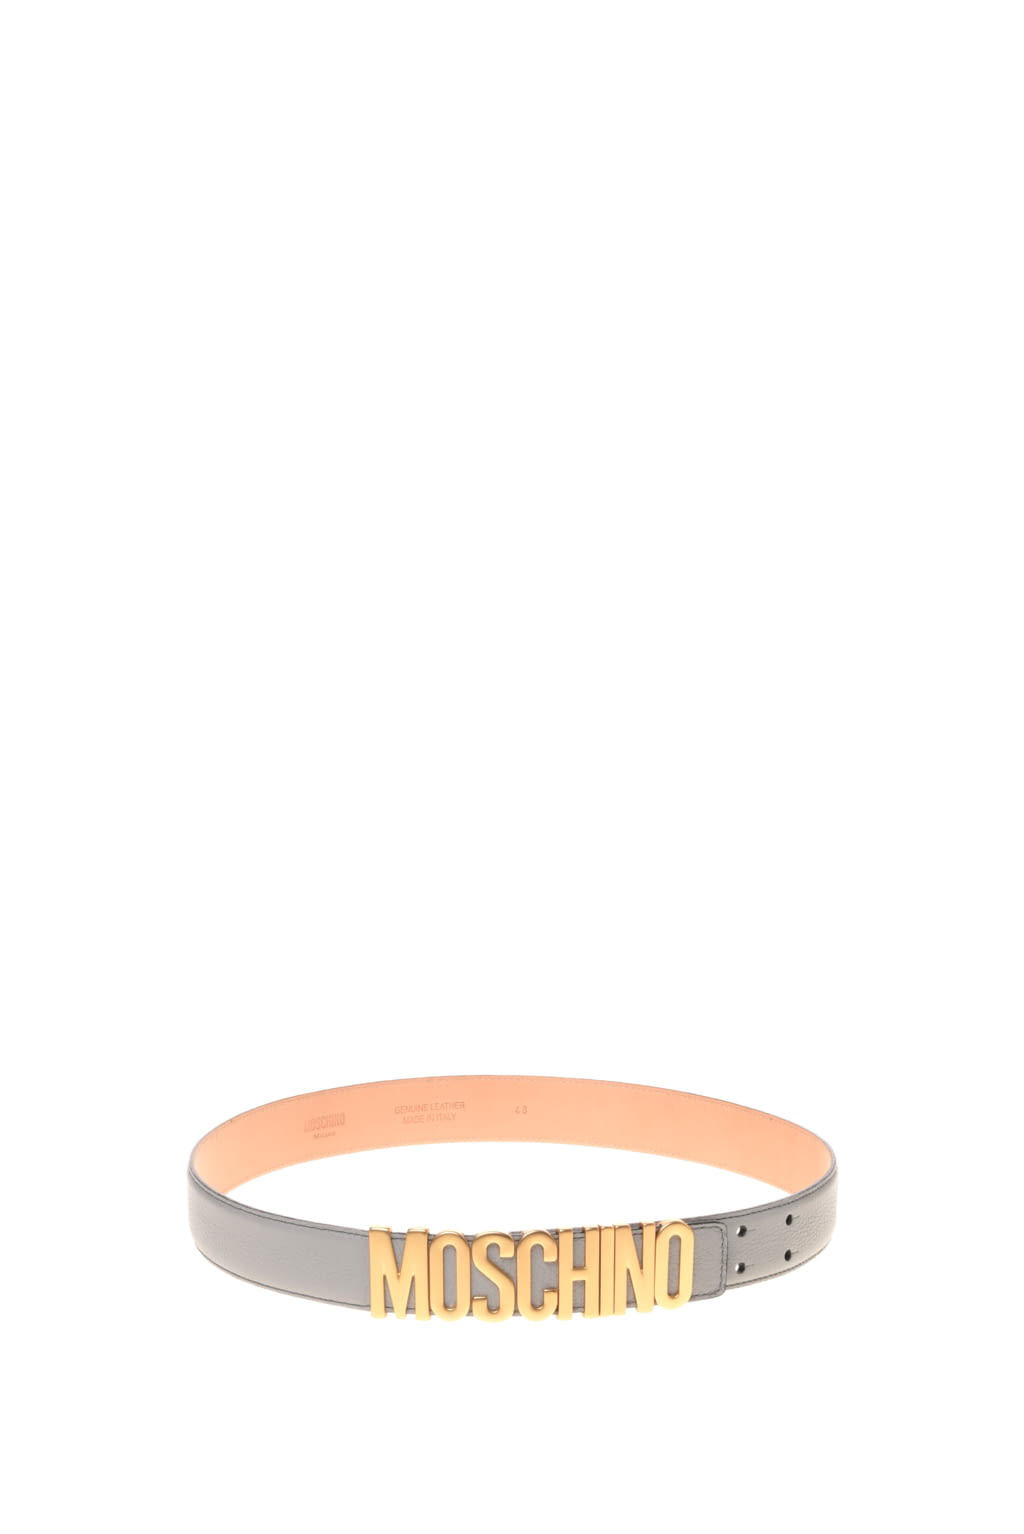 Moschino FW21 menswear accessories #121 The Fashion Search Engine - TAGWALK